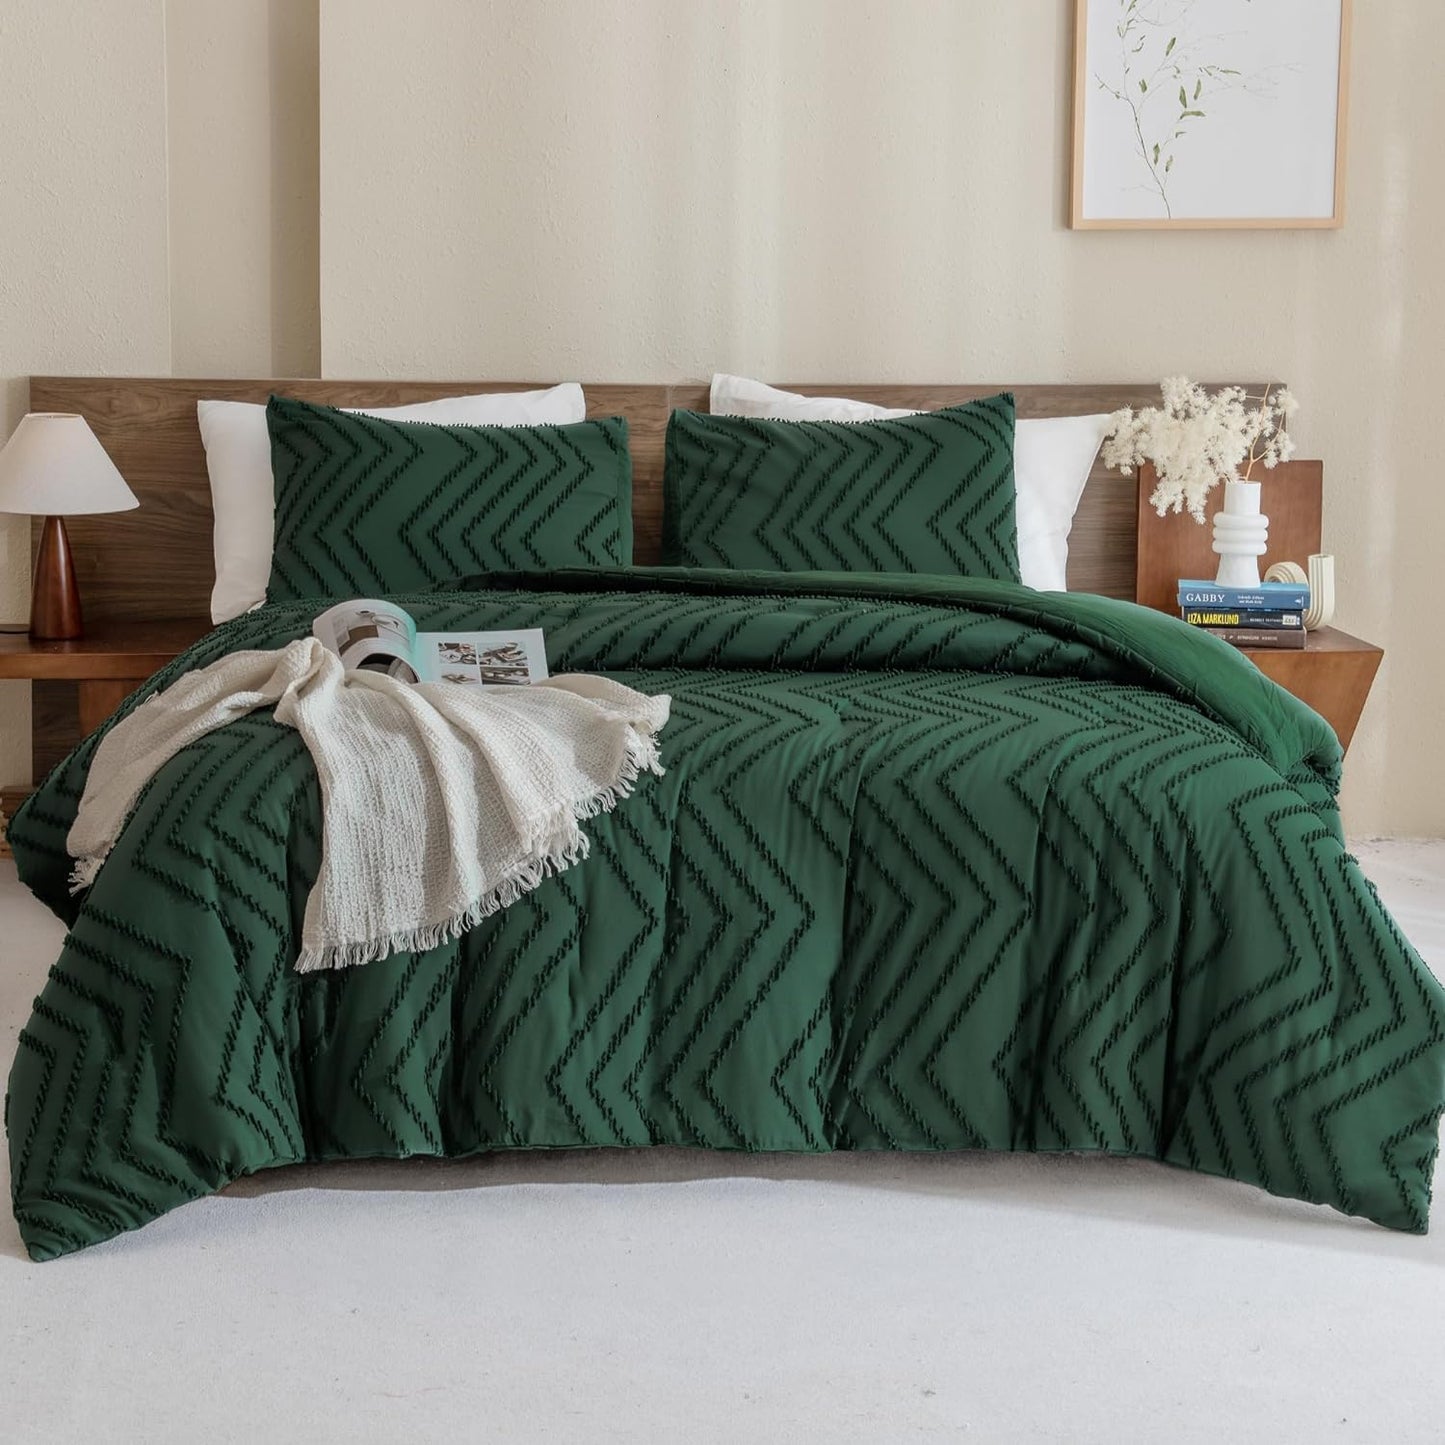 Emerald Green Comforter Set Full Size, Boho Dark Green Soft Warm Bedding Comforter Sets for Full Bed, 3 Pieces Forest Green Vintage Chevron Tufted Aesthetic Comforter Set